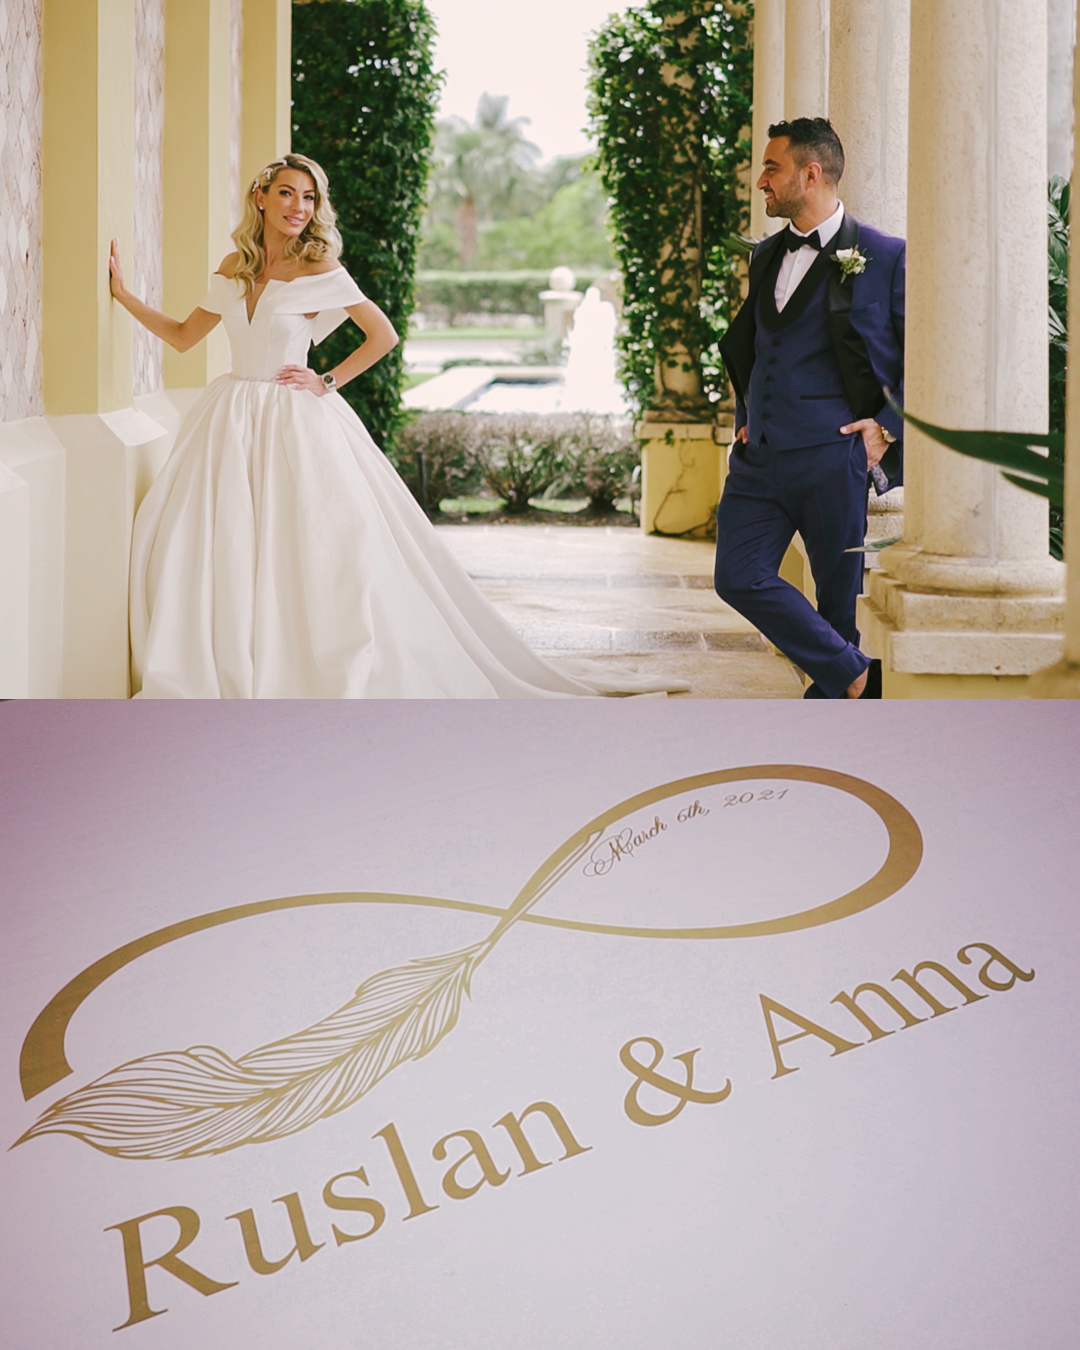 Anna and Ruslan's wedding at The Addison - image 1